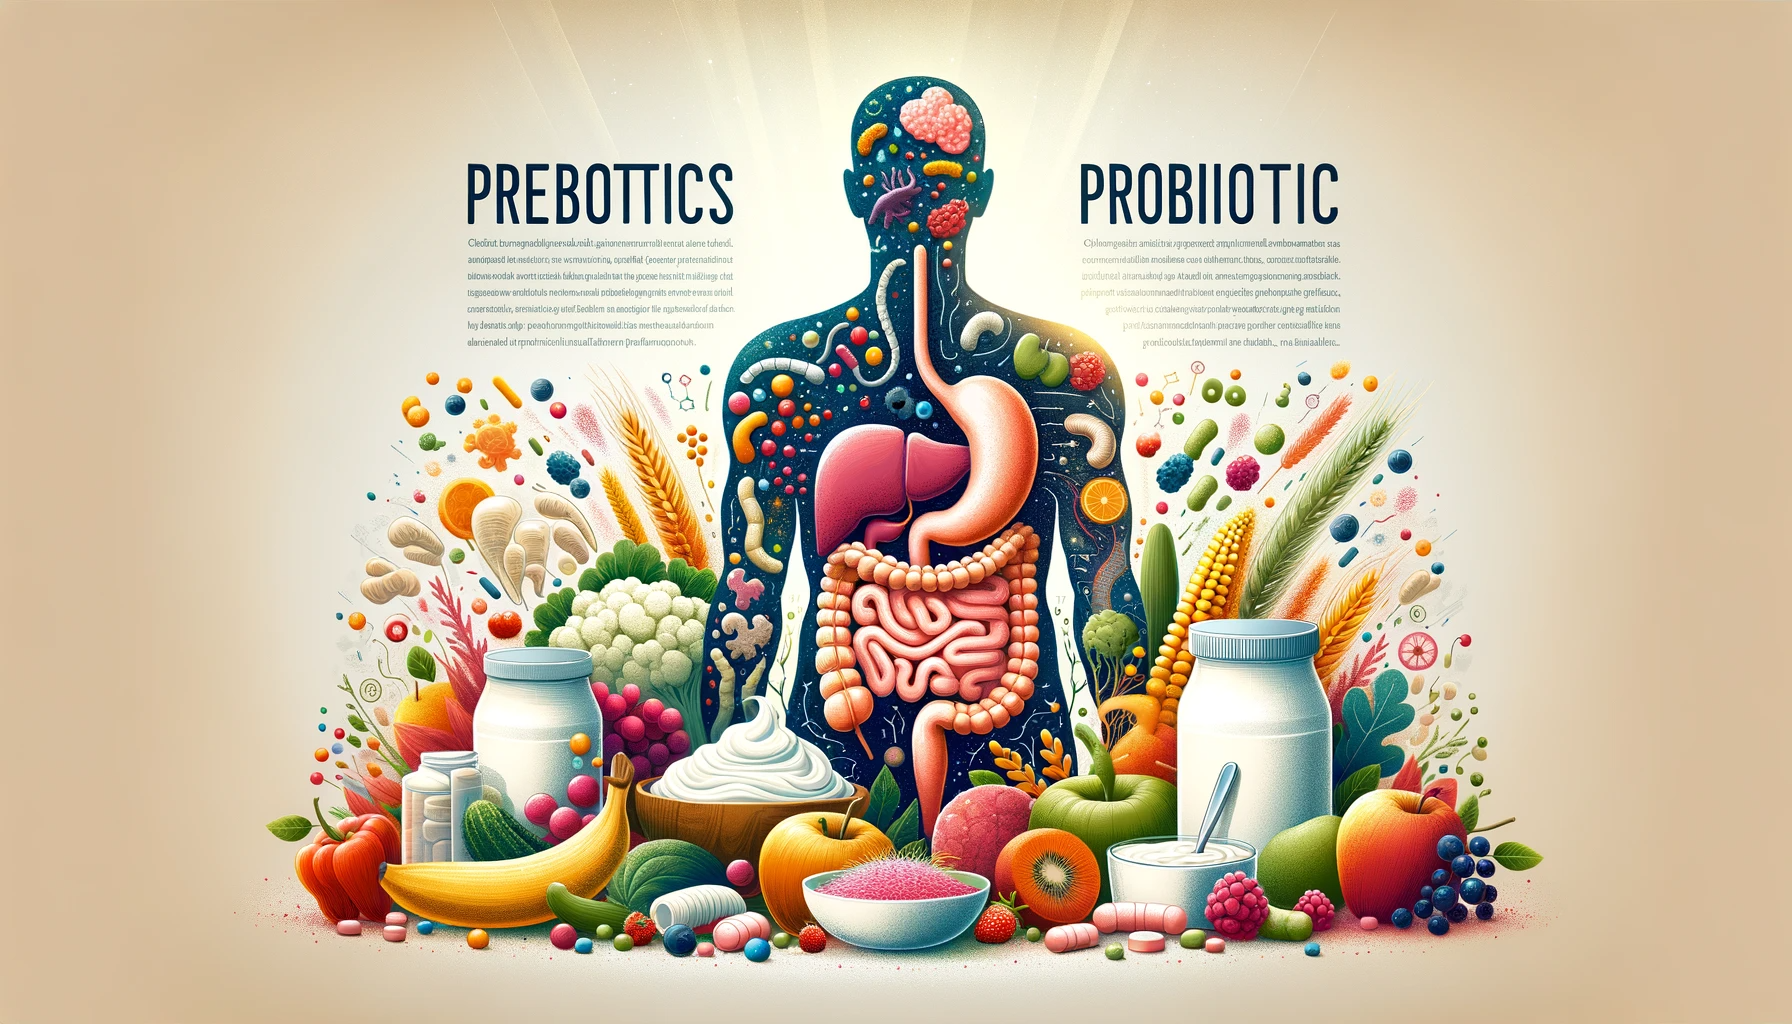 Why prebiotics are probably more important than probiotics